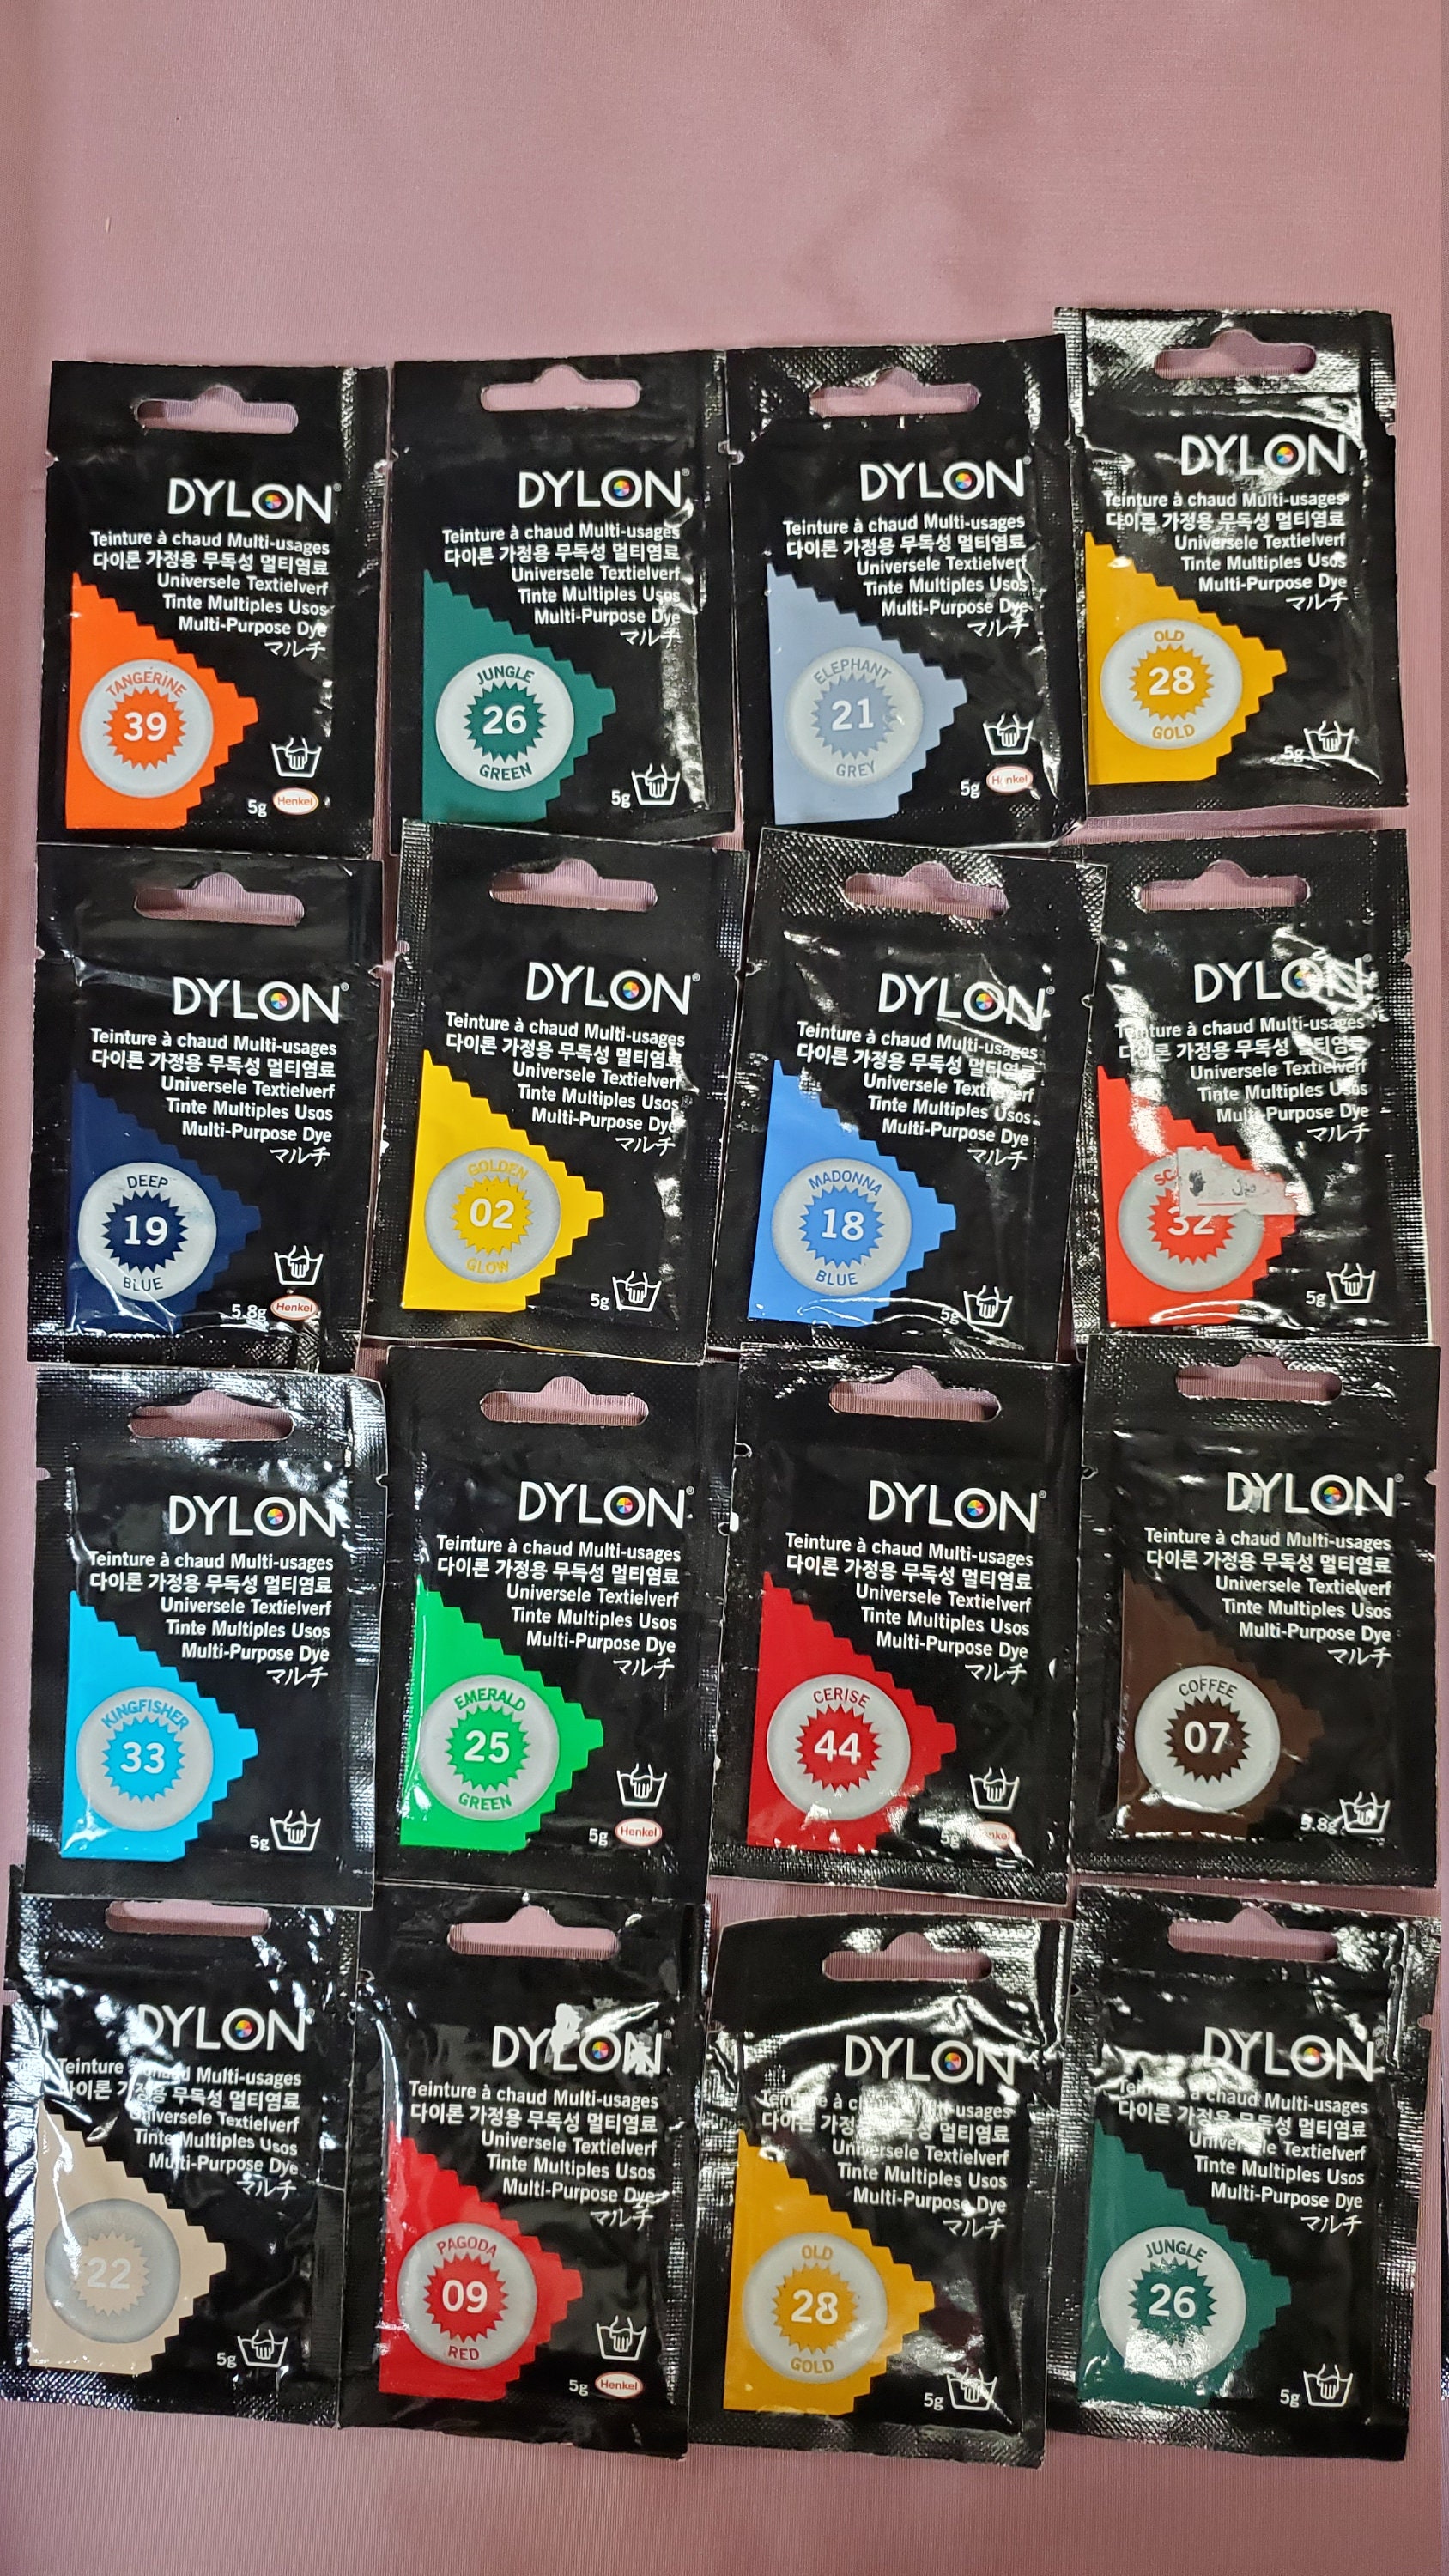 Dylon Hand Dye 50g Full Range of Colours Available Cheapest Prices